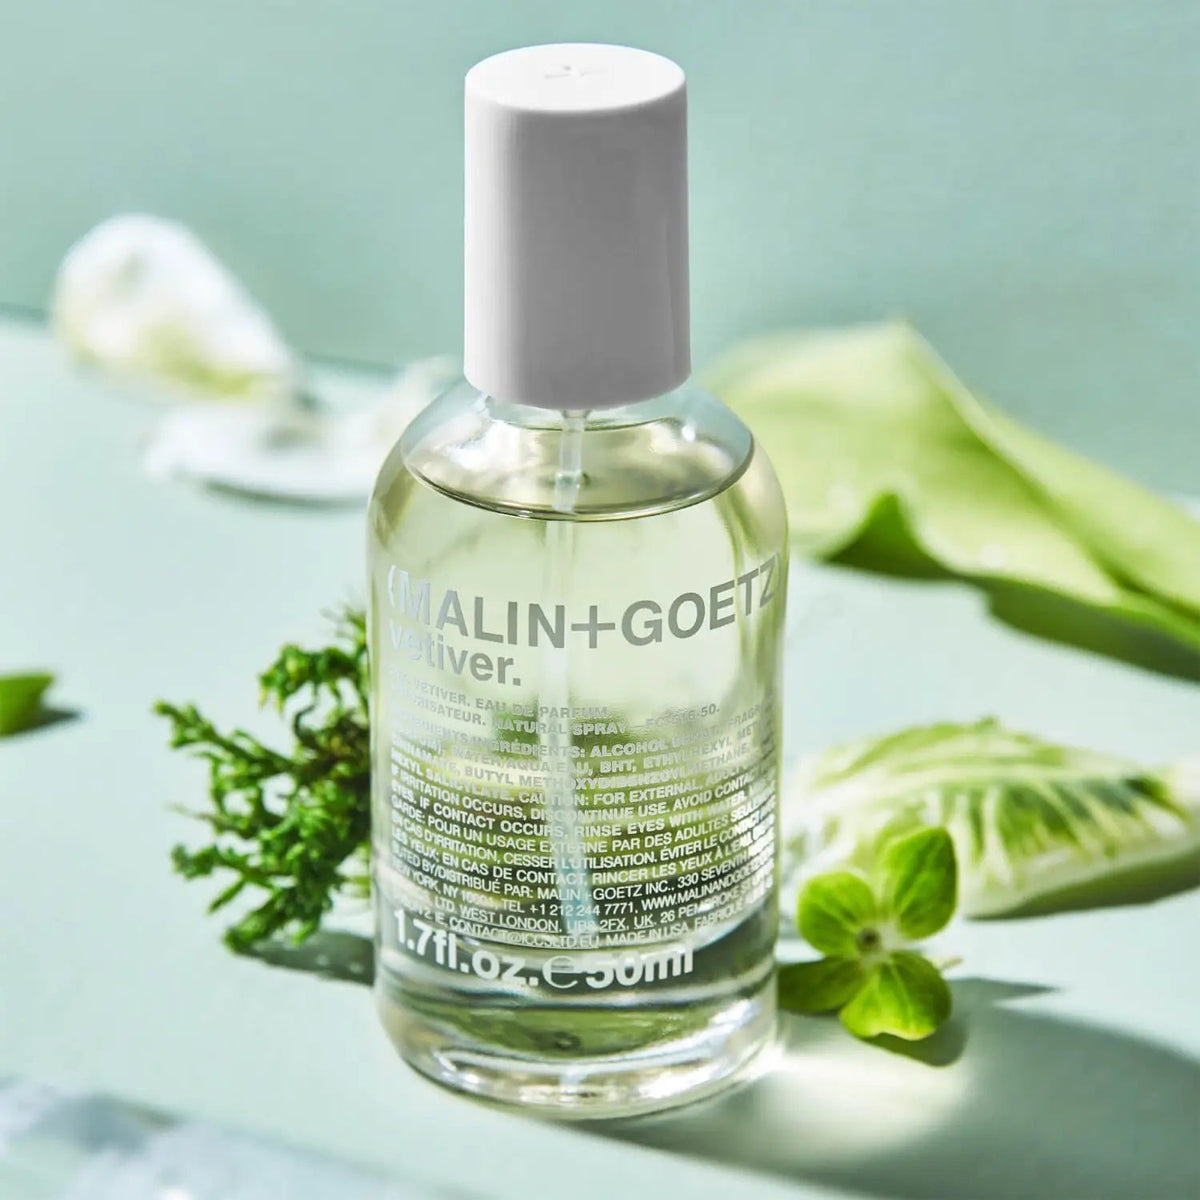 Malin + Goetz Vetiver Eau de Parfum